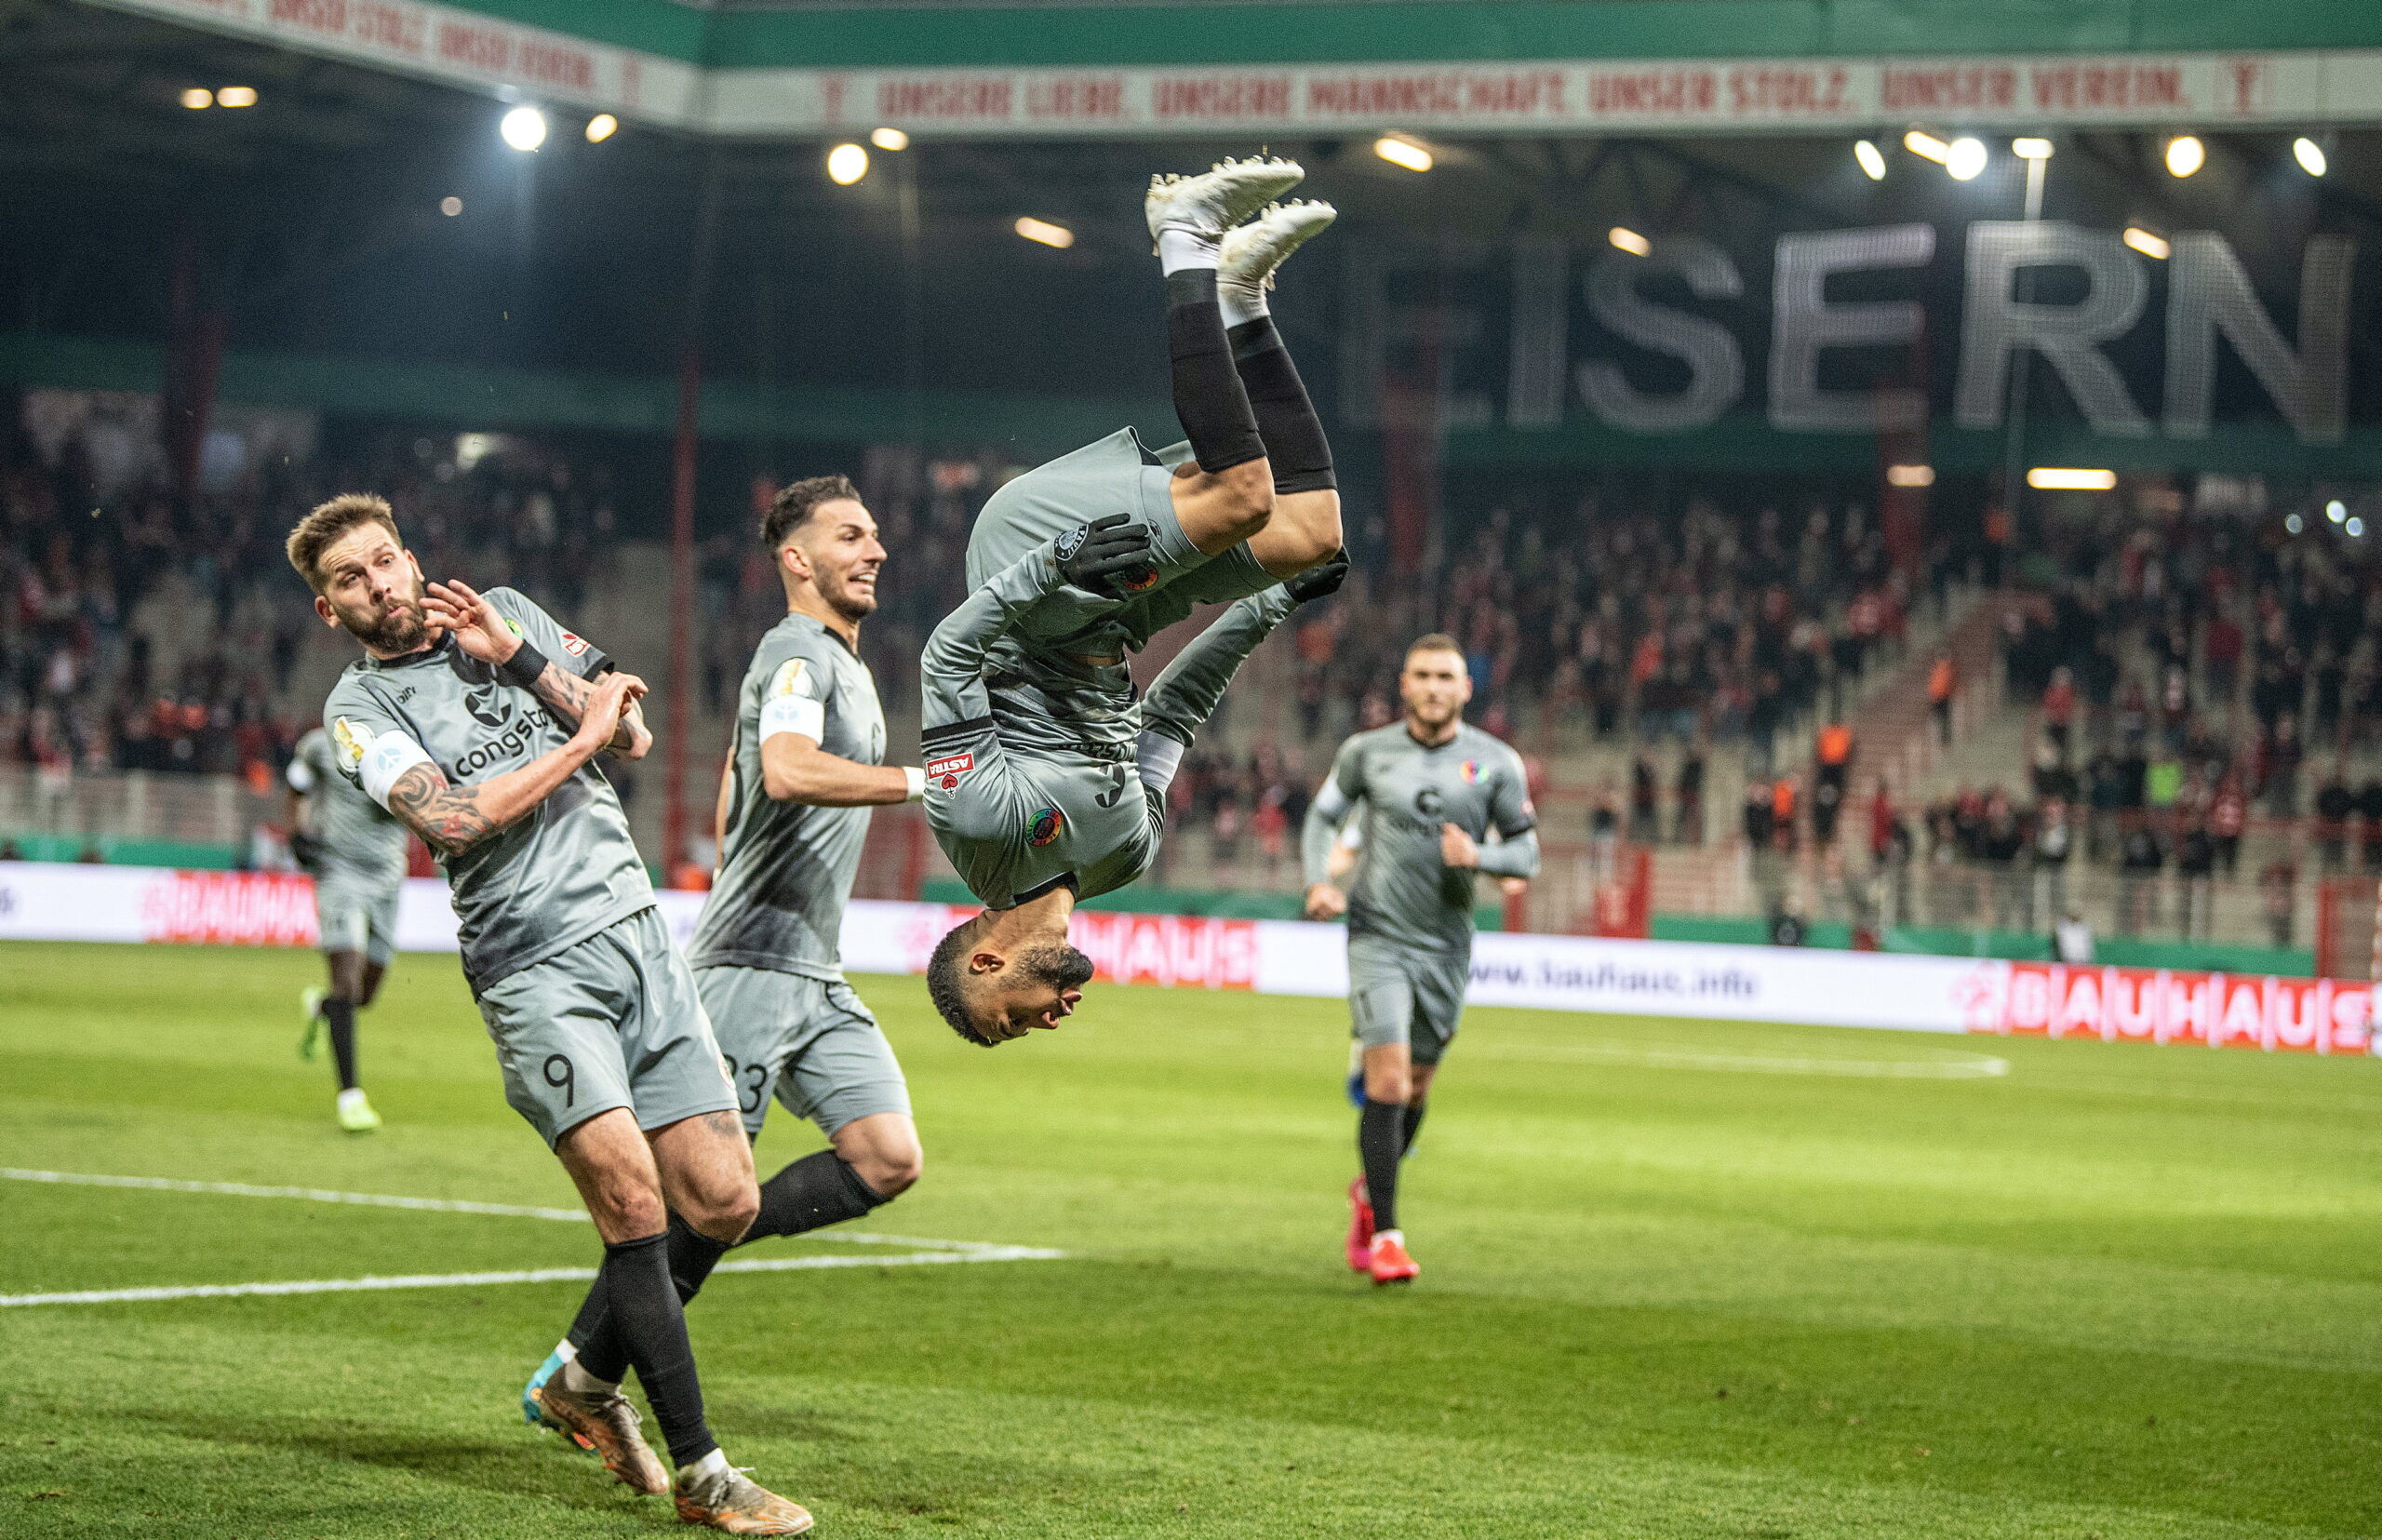 Daniel-Kofi Kyereh feierte sein Tor im DFB-Pokal mit einem Salto.